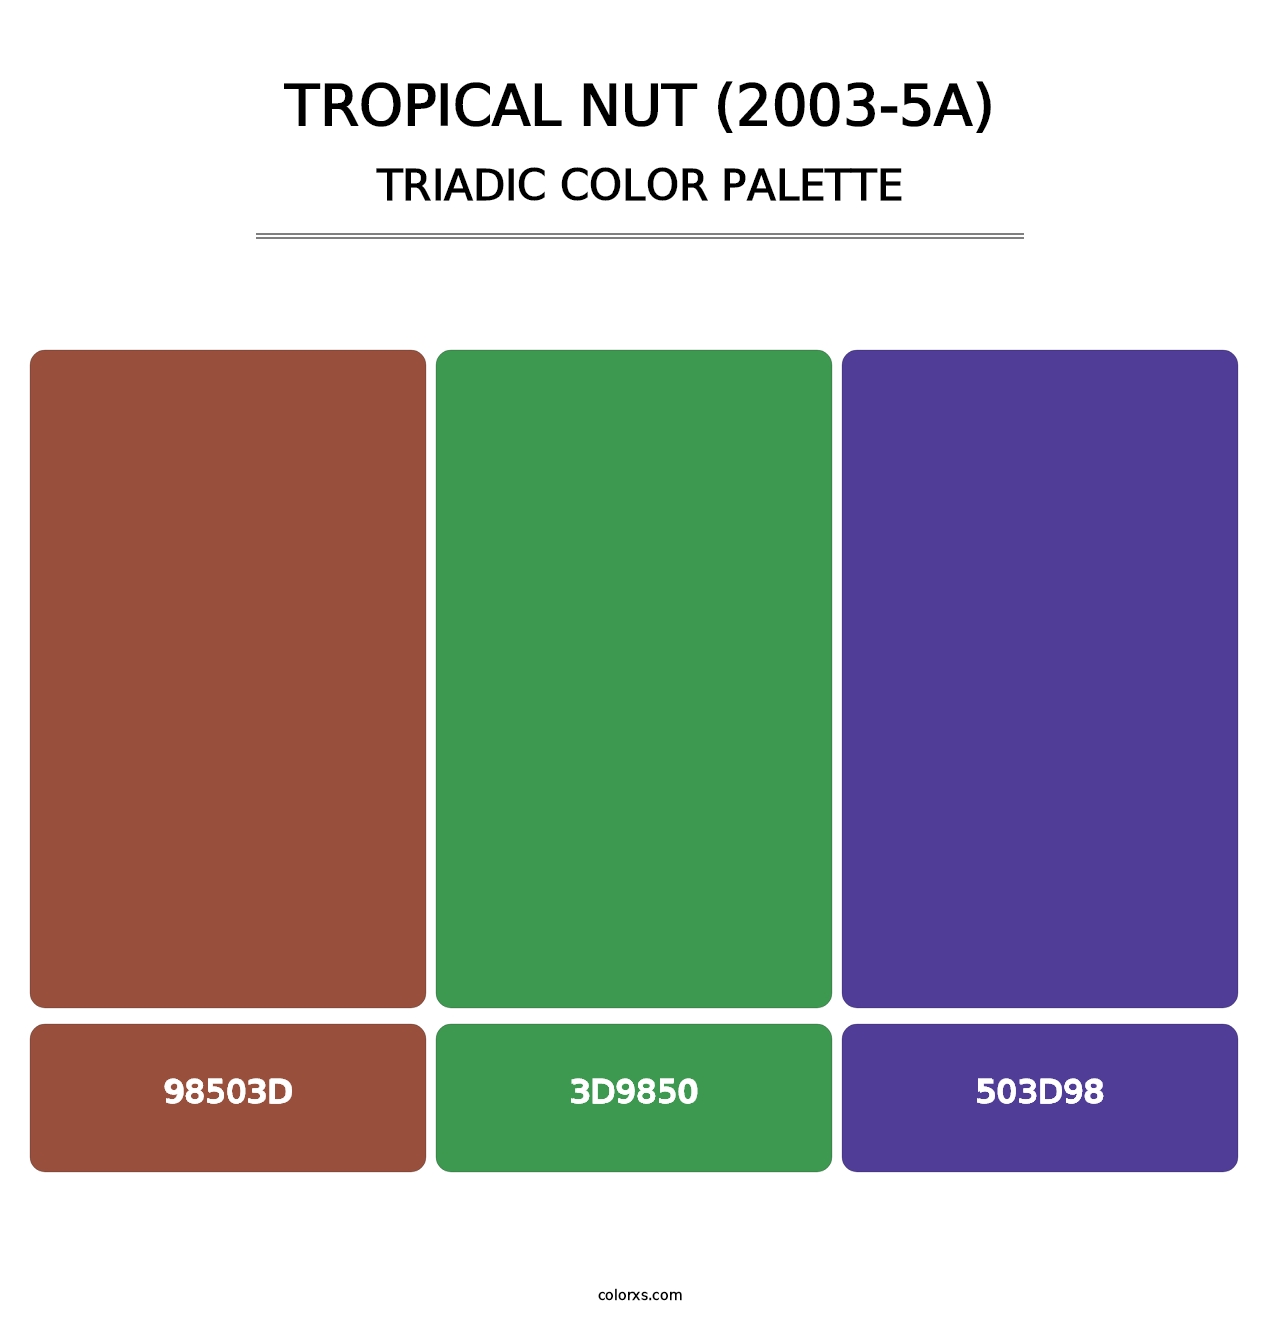 Tropical Nut (2003-5A) - Triadic Color Palette